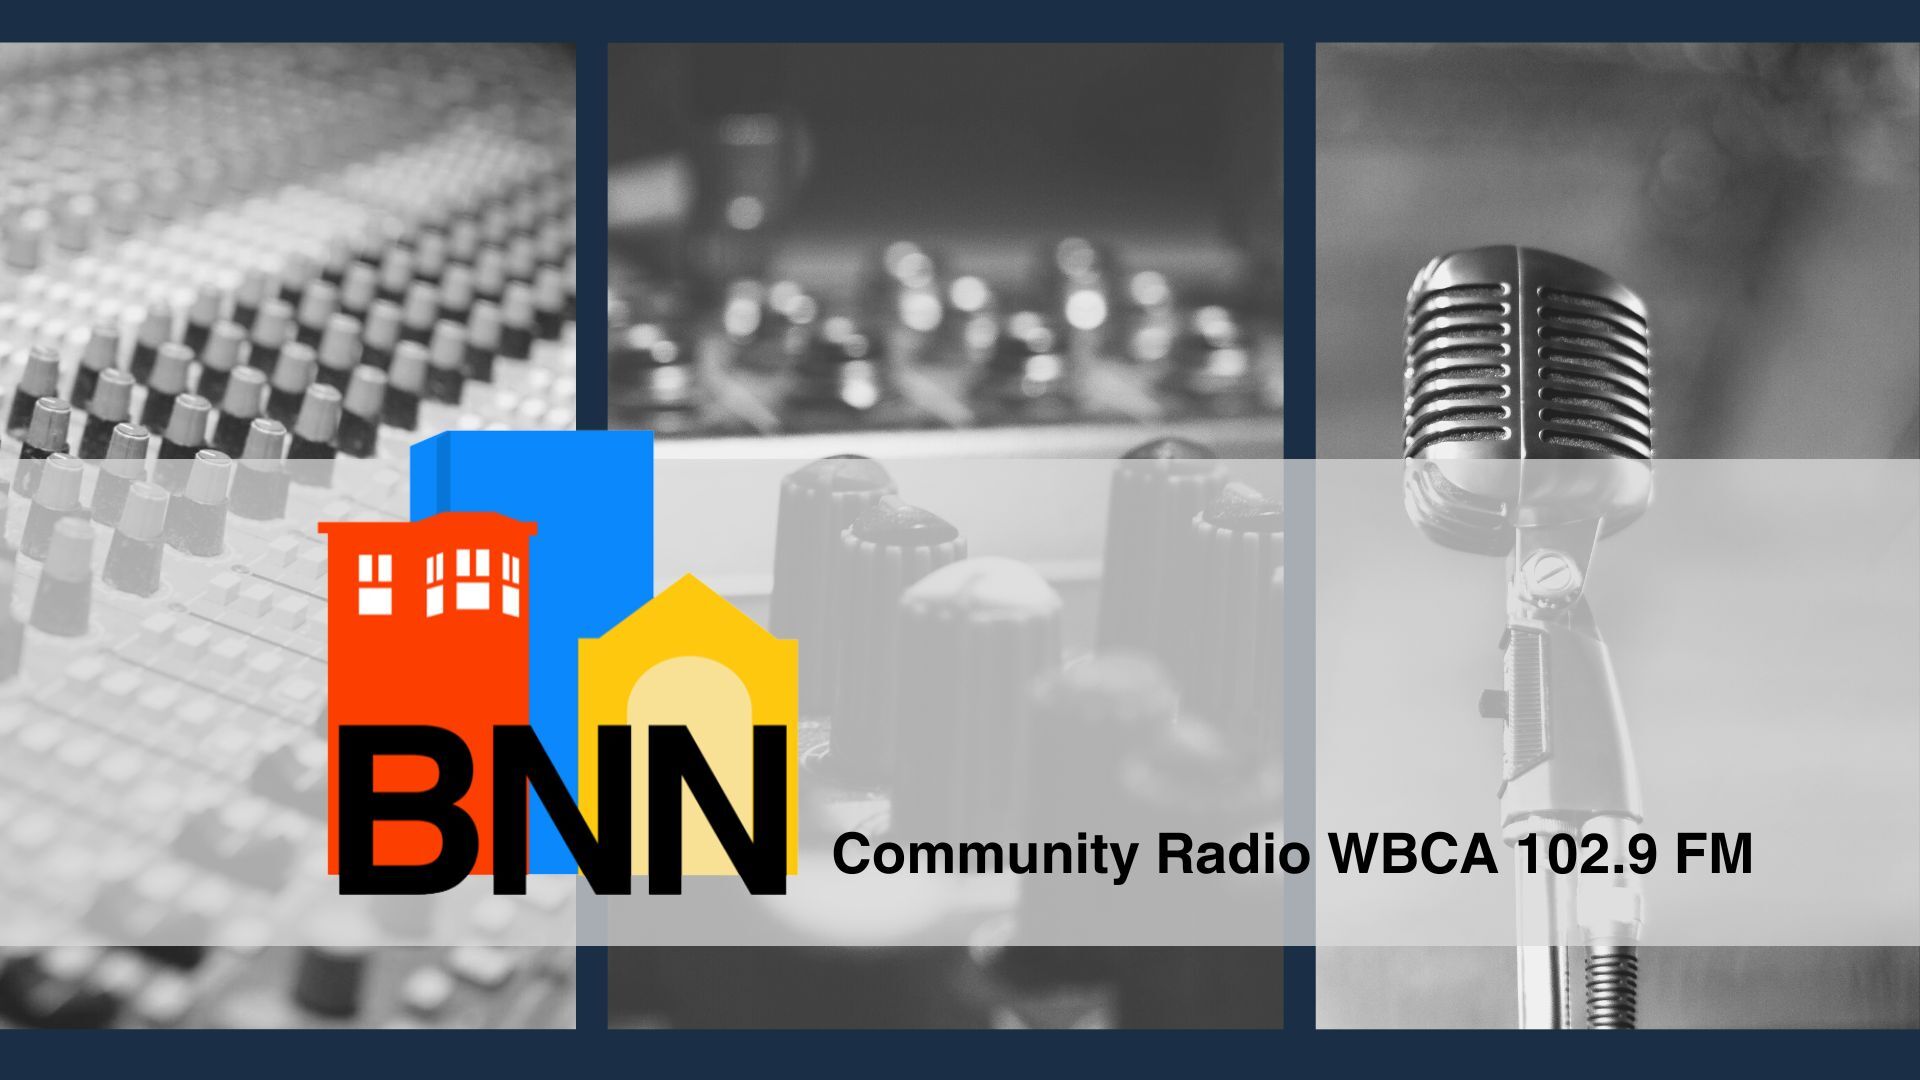 WBCA Podcasts